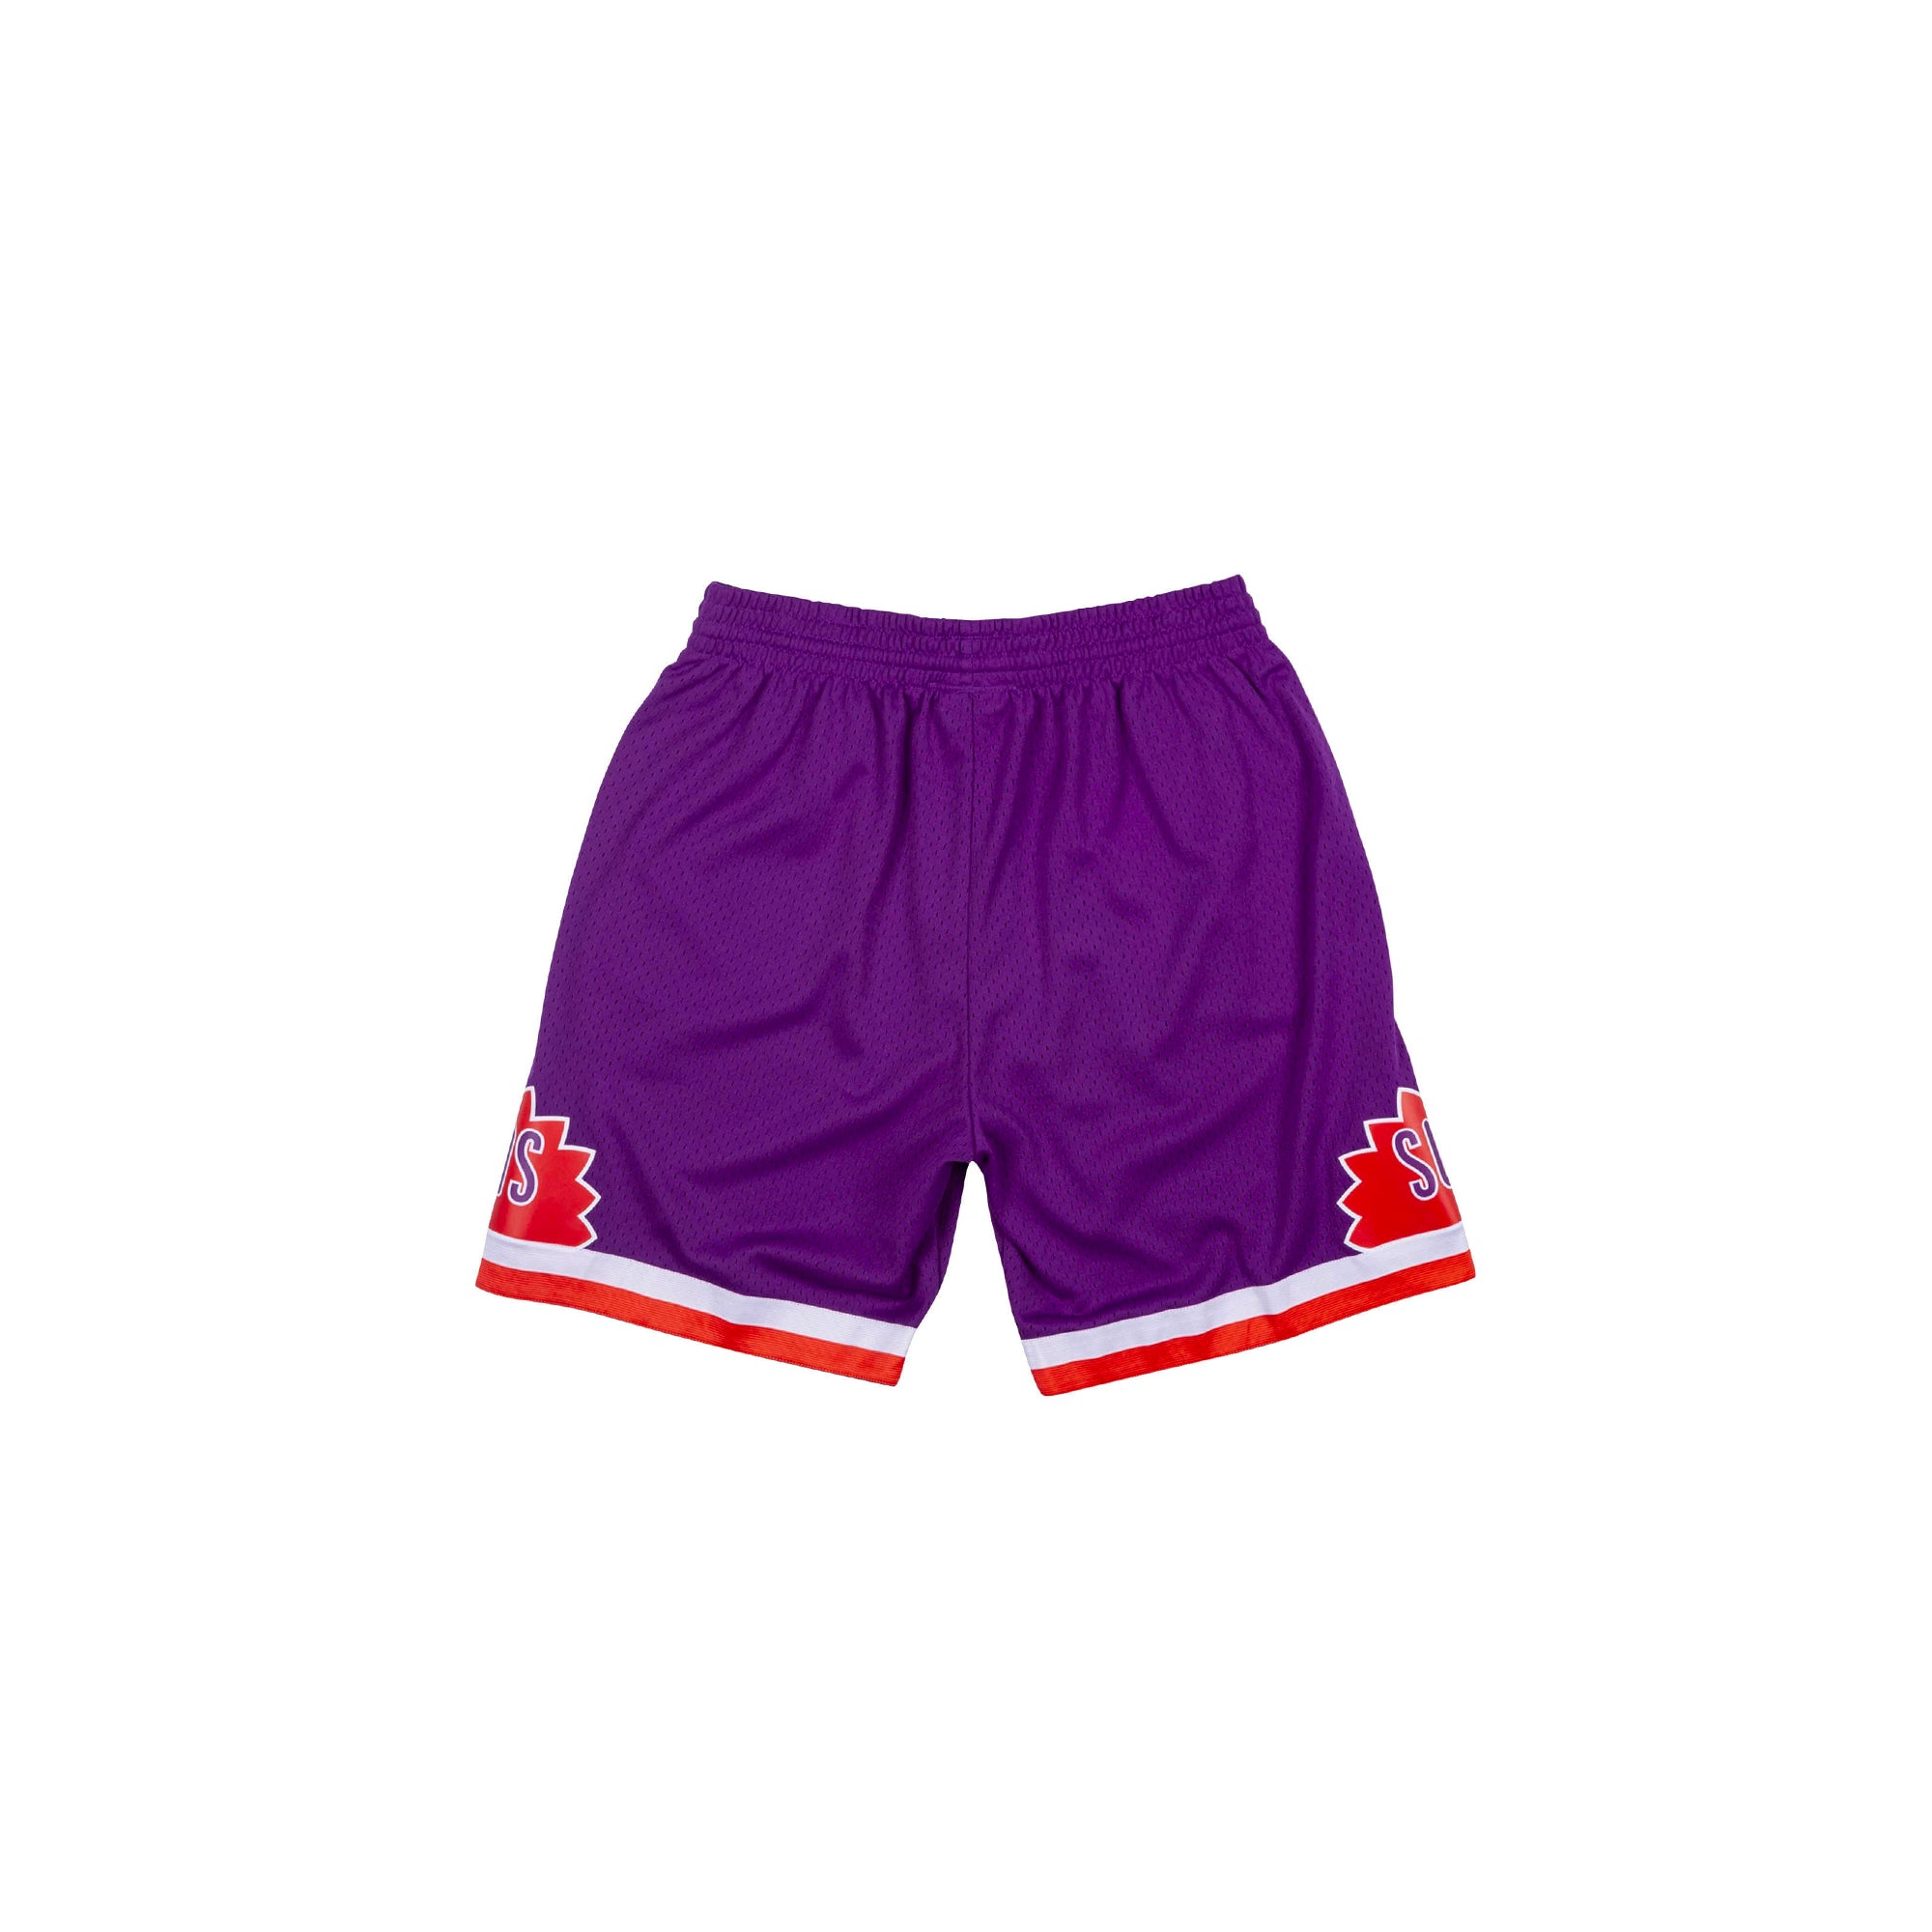 Mitchell & Ness Men's Phoenix Suns Swingman Shorts - Black